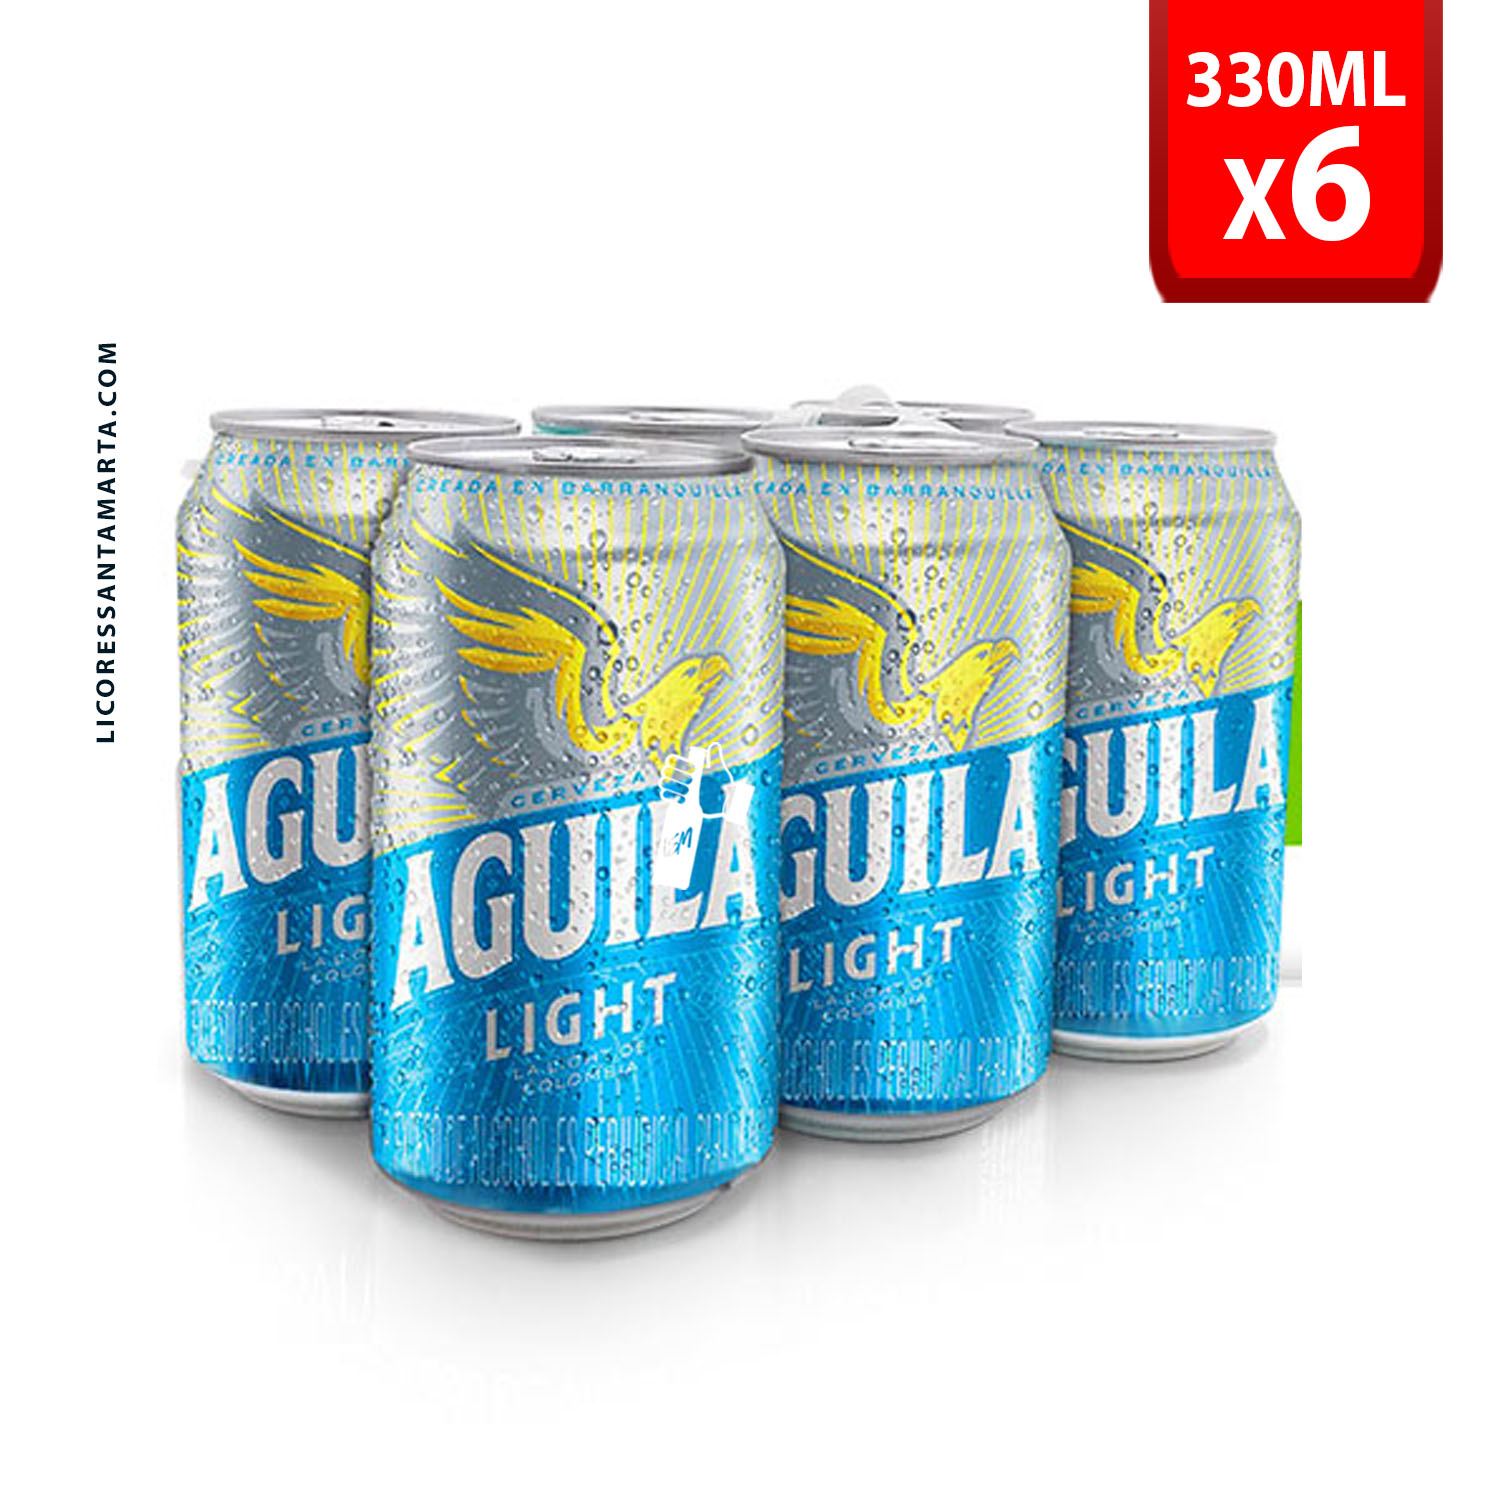 AGUILA LIGHT LATA 330ml SIX PACK – Licores Santa Marta